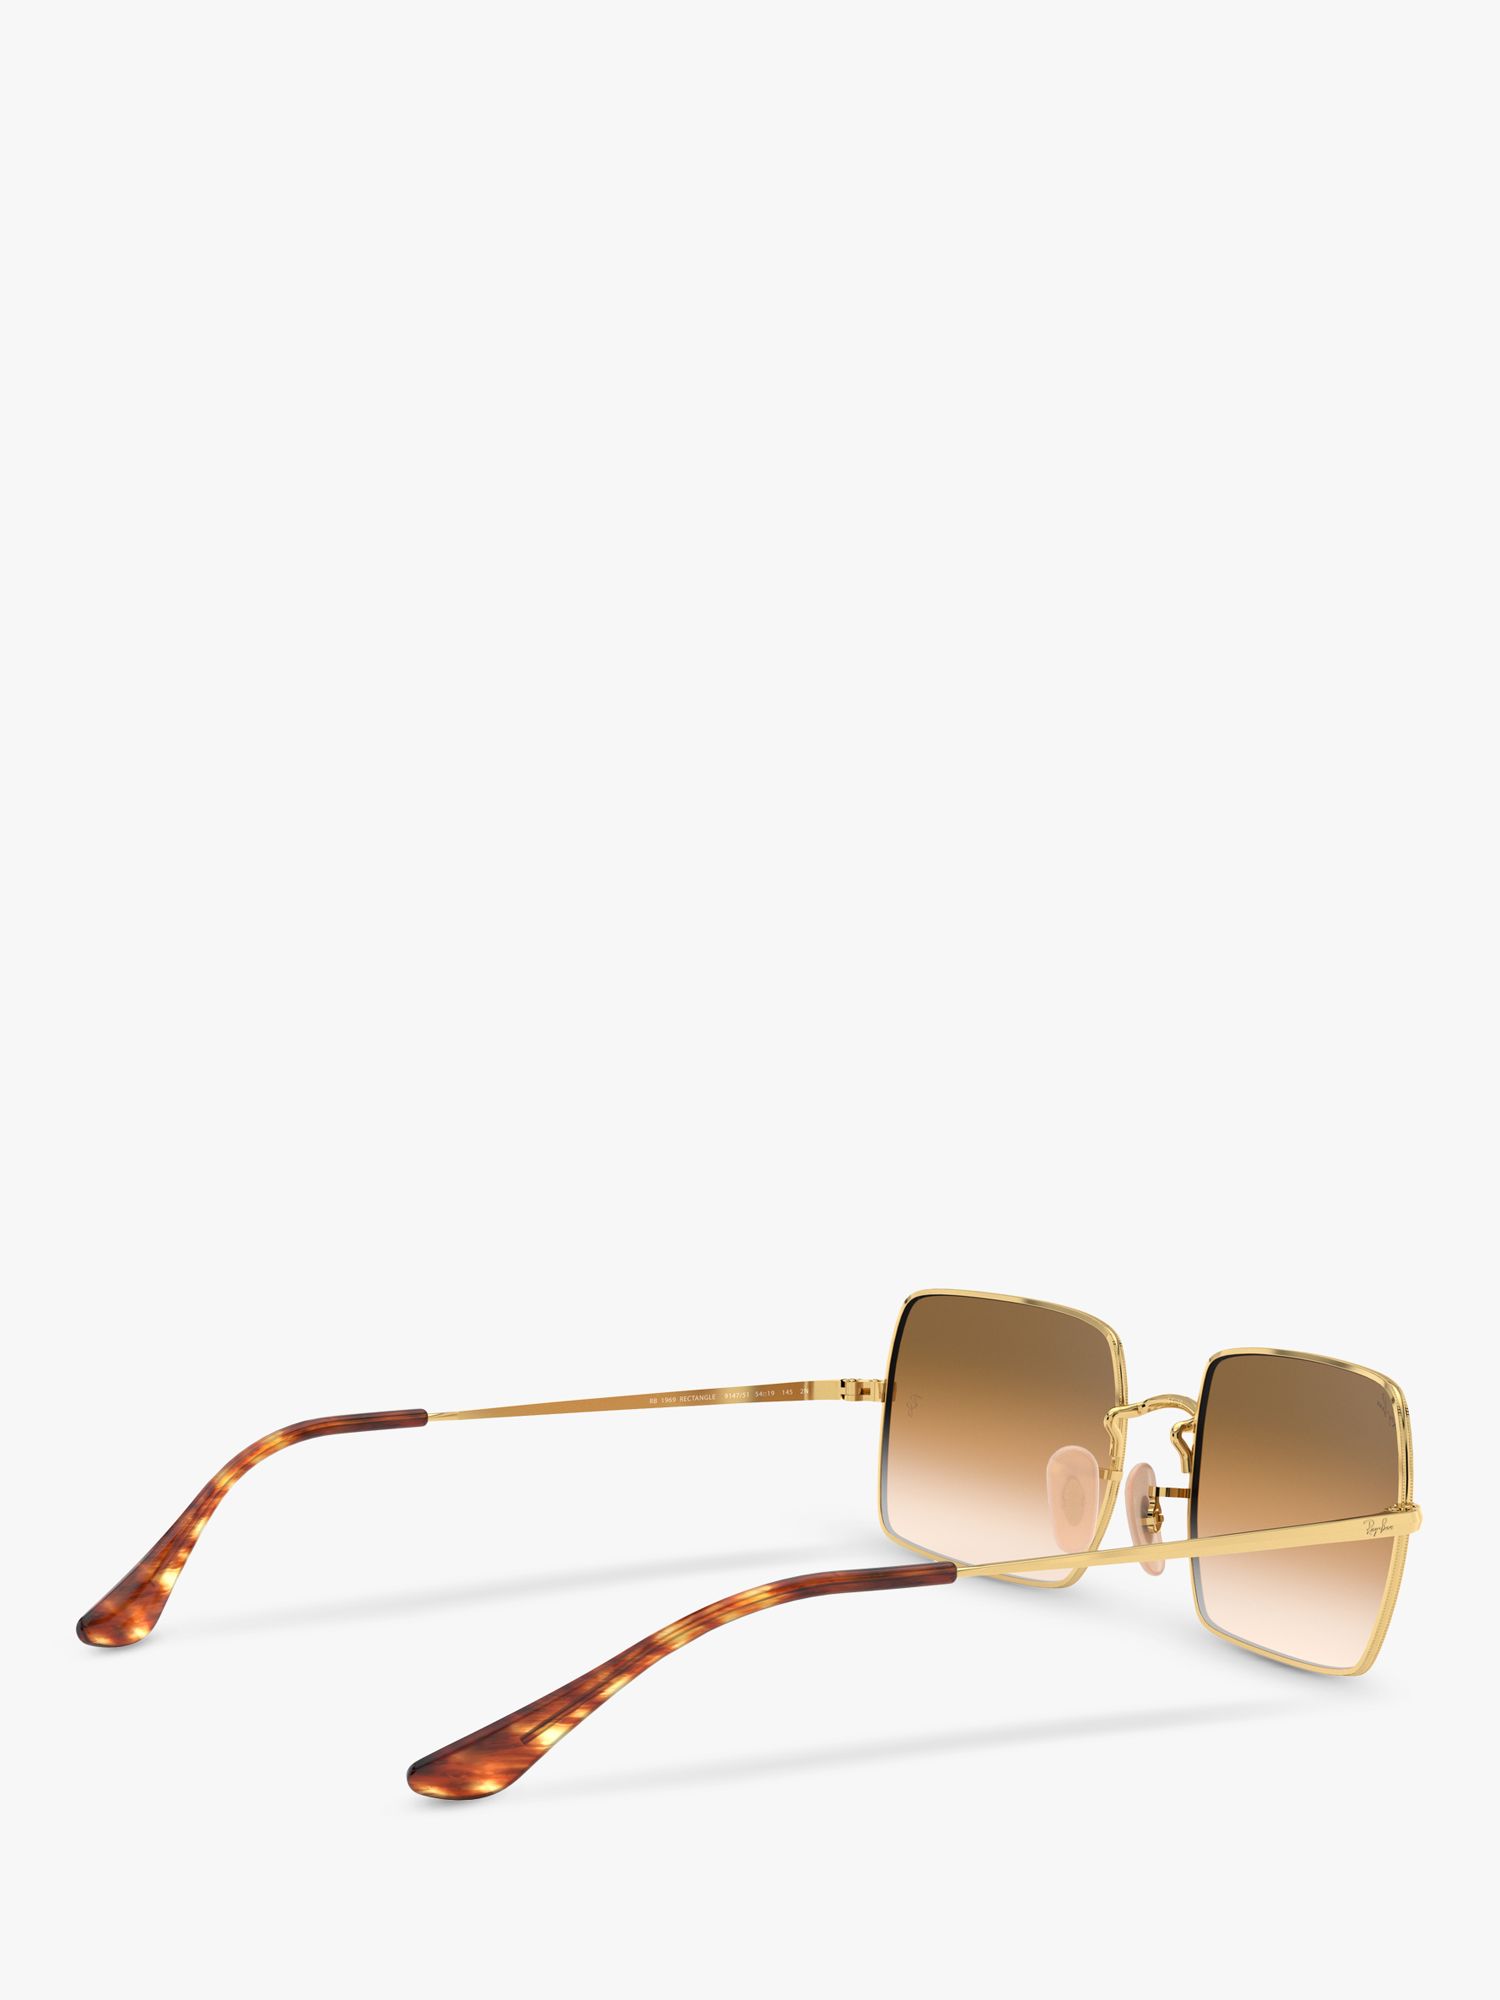 Ray-Ban RB1969 Unisex Rectangular Sunglasses, Gold/Brown Gradient